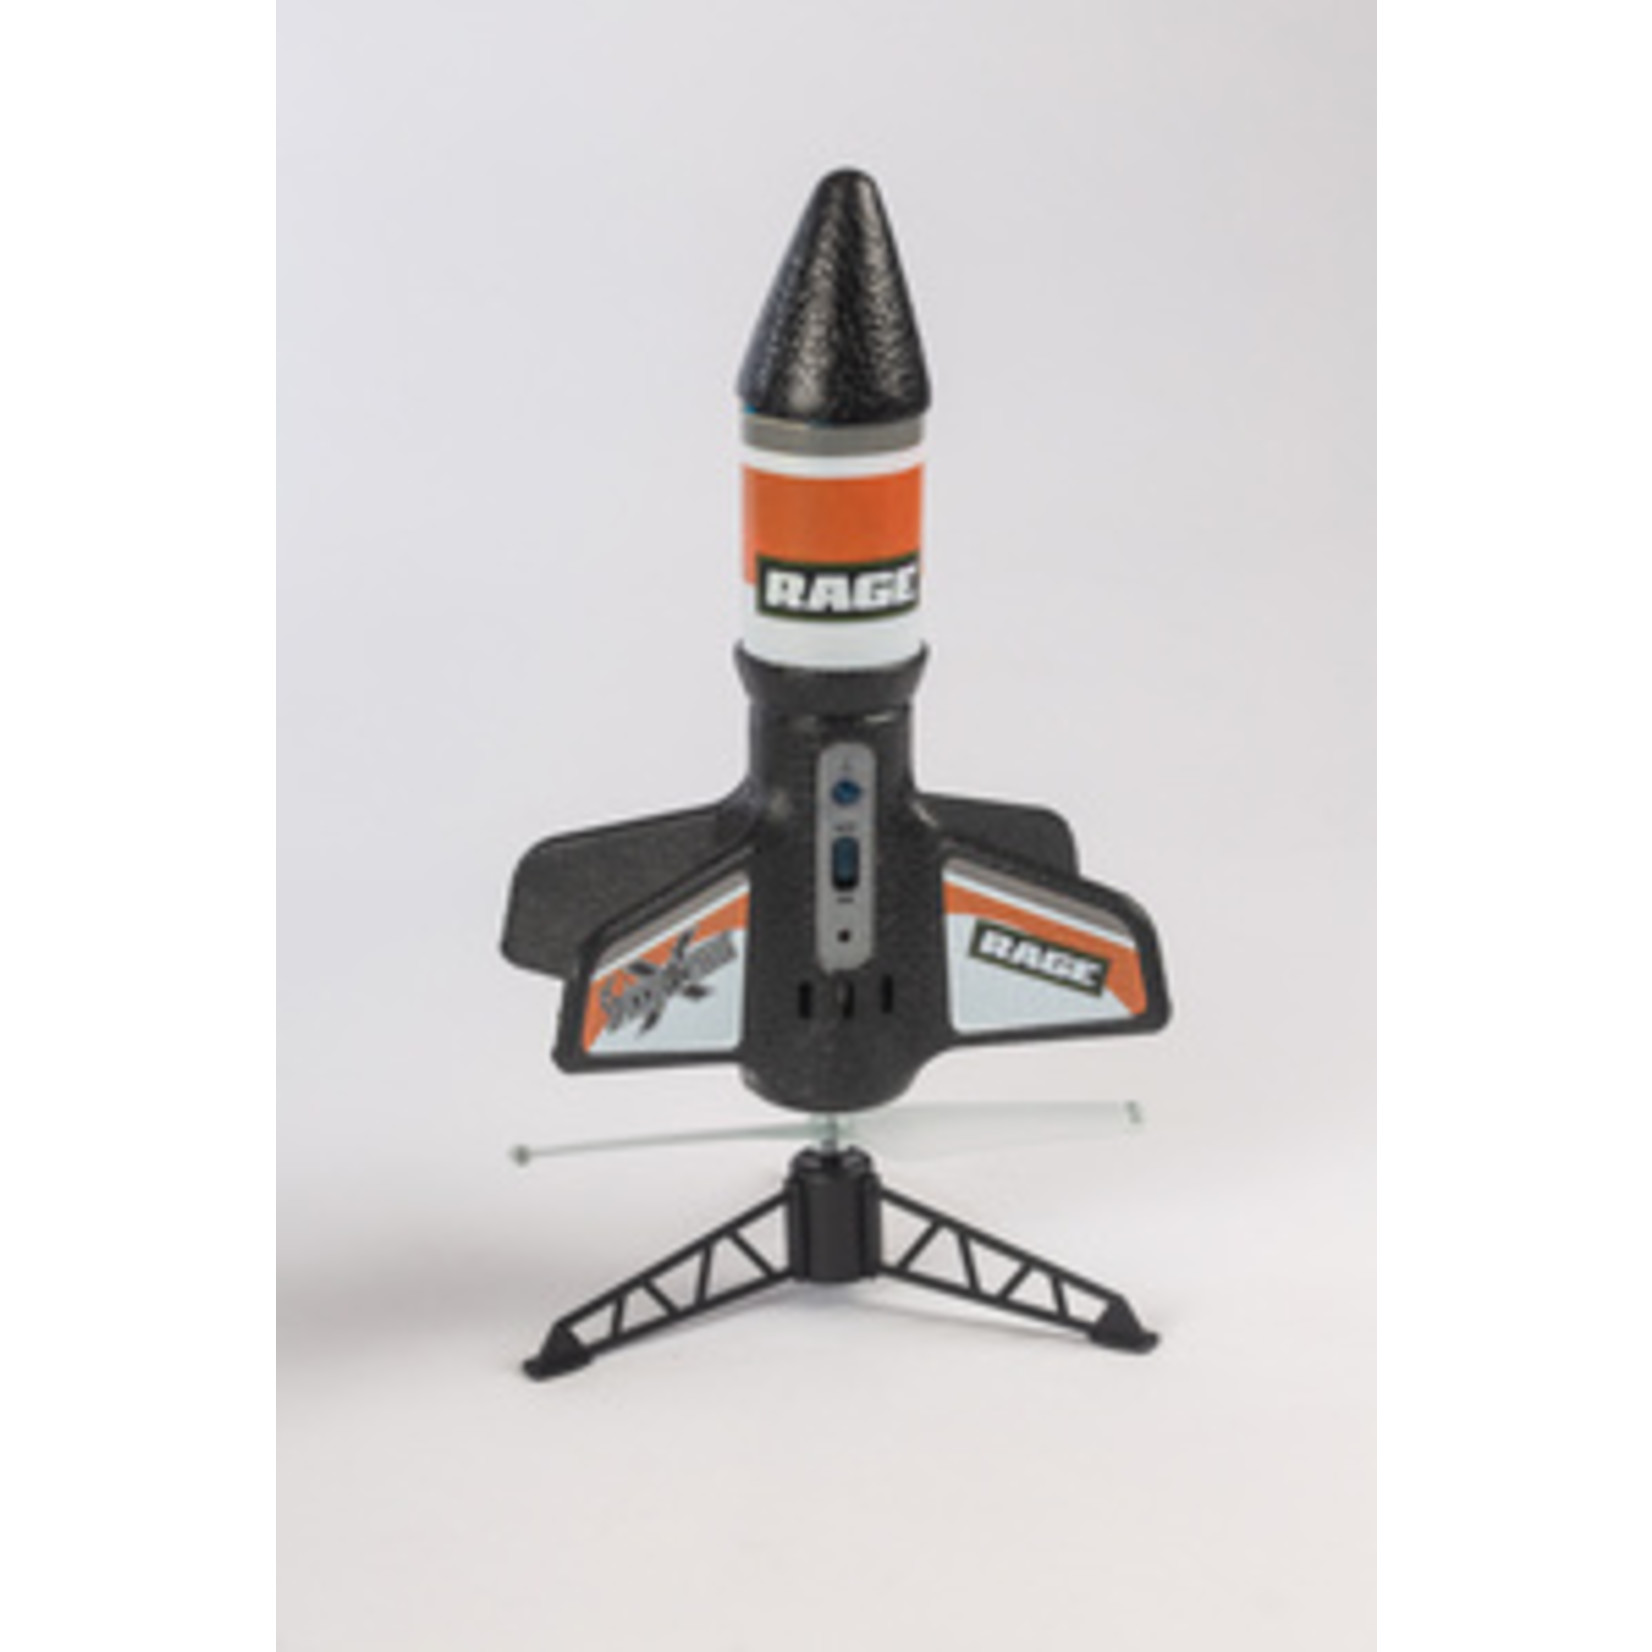 Rage R/C Spinner Missile X - Black Electric Free-Flight Rocket